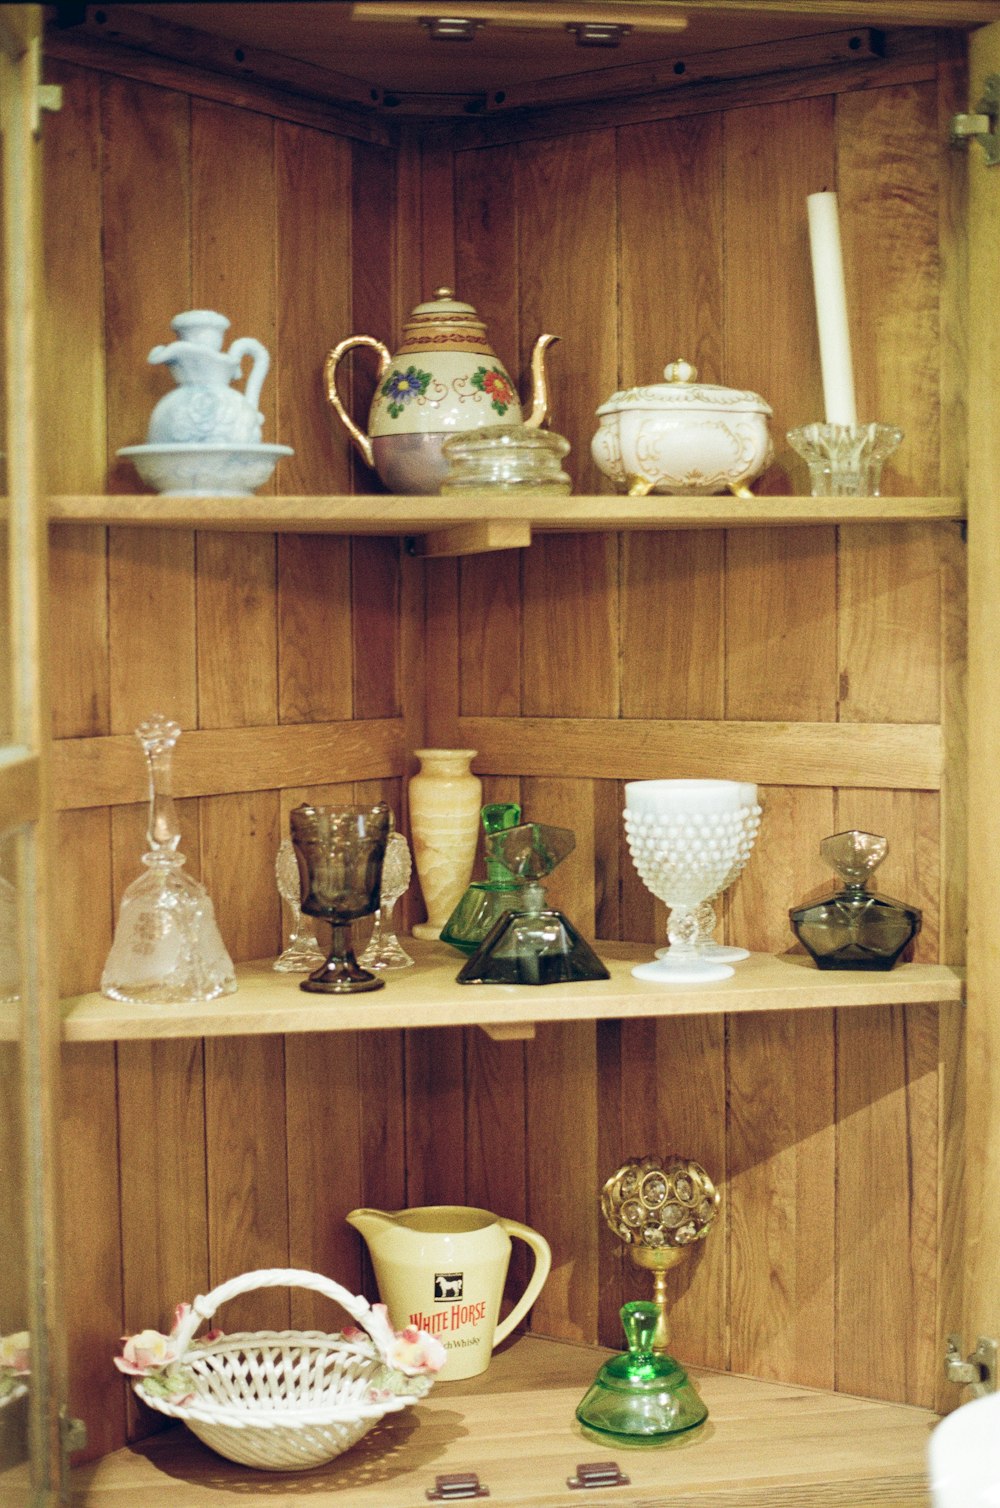 white and blue ceramic tea set on brown wooden shelf